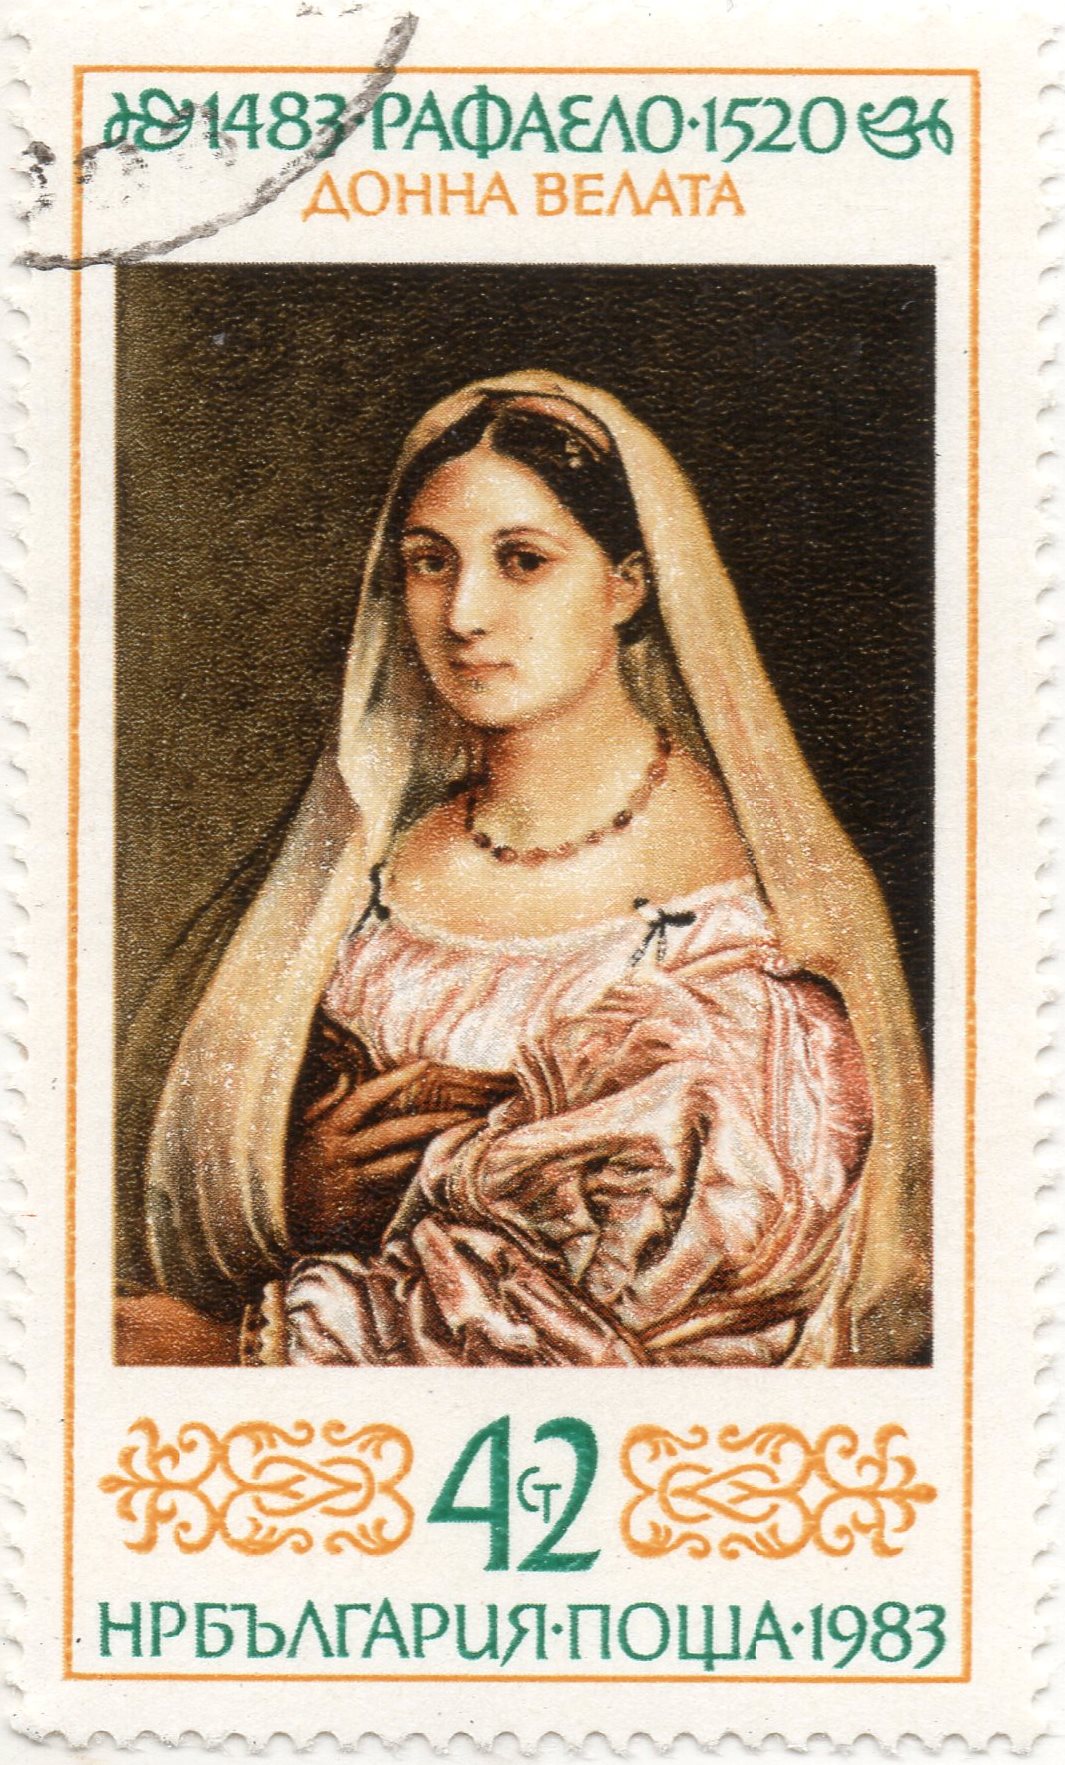 nft #4 La donna velata Raphael 1483 - 1520 Peoples Republic of Bulgaria 42 st post 1983